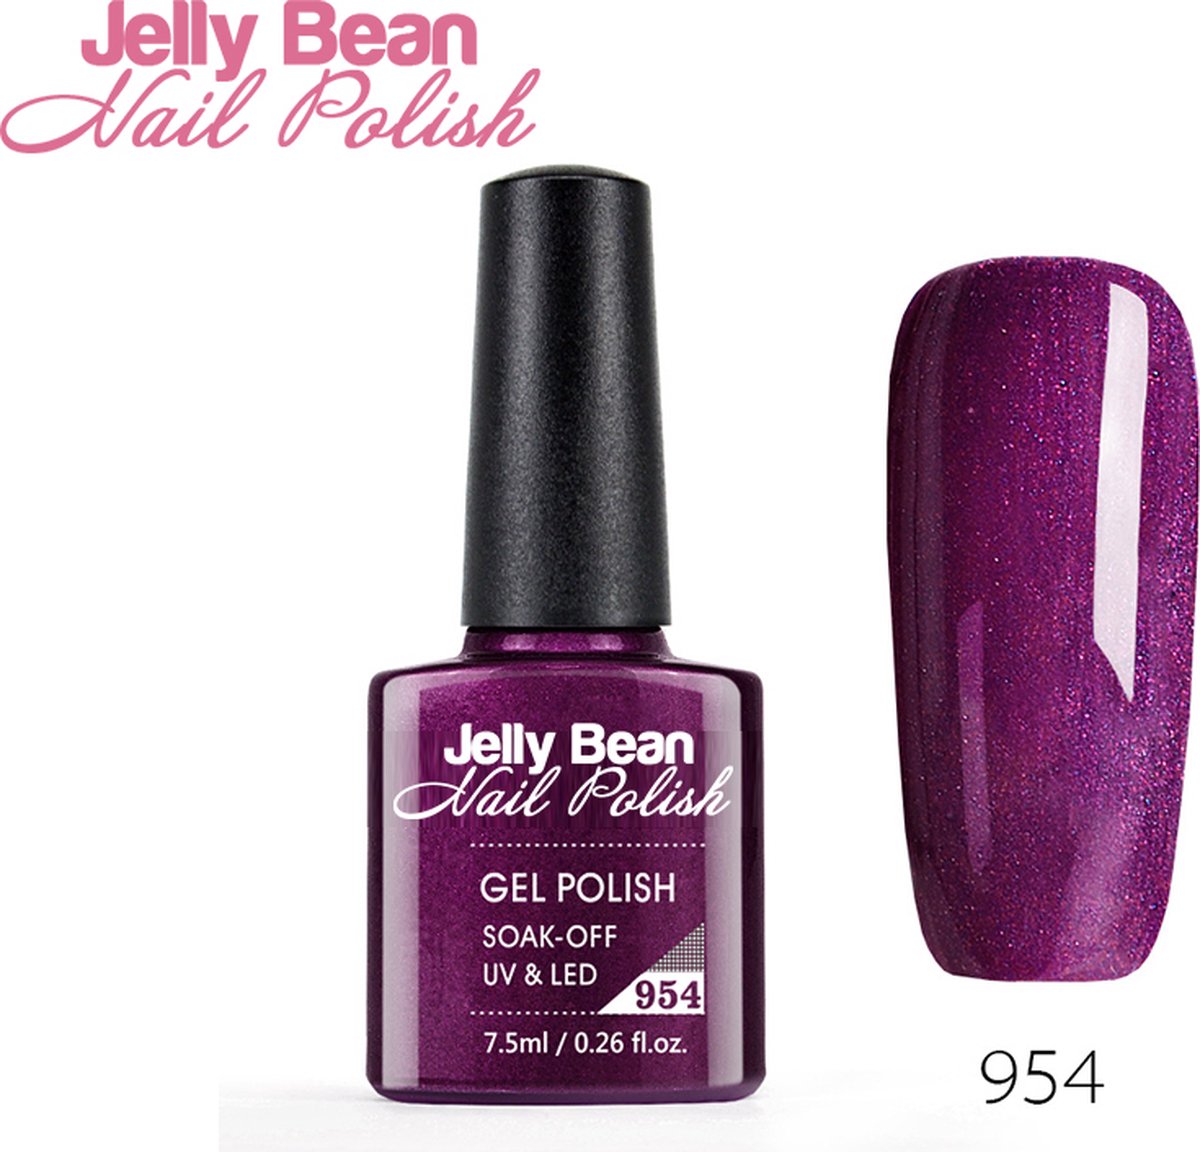 Jelly Bean Nail Polish UV gelnagellak 954